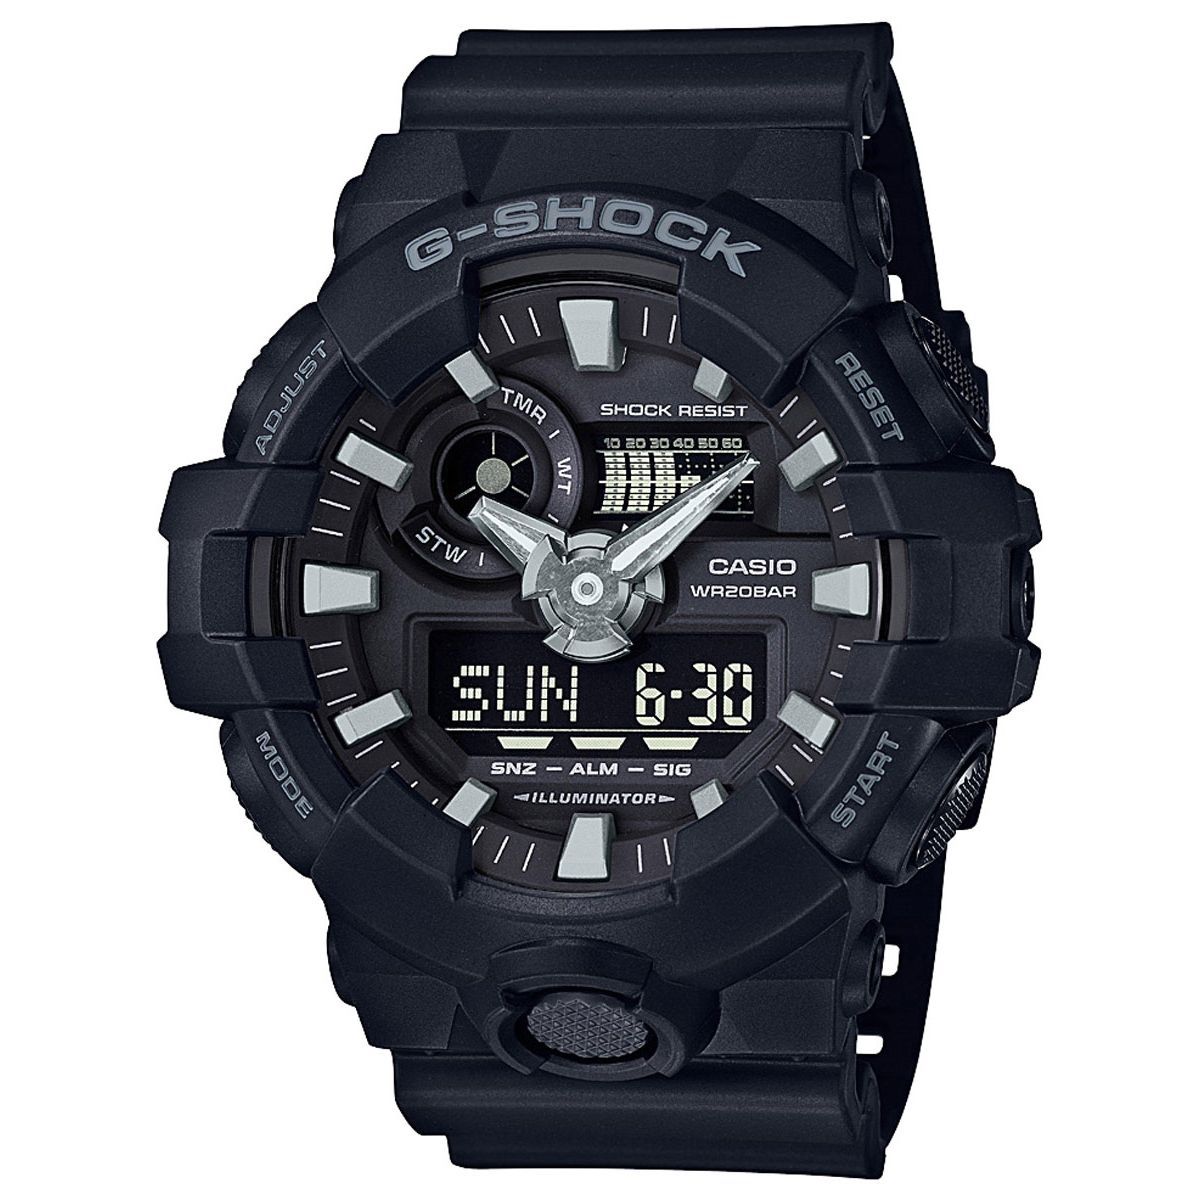 Casio G715 G-shock (ga-700-1bdr) Analog-digital Watch-for Men